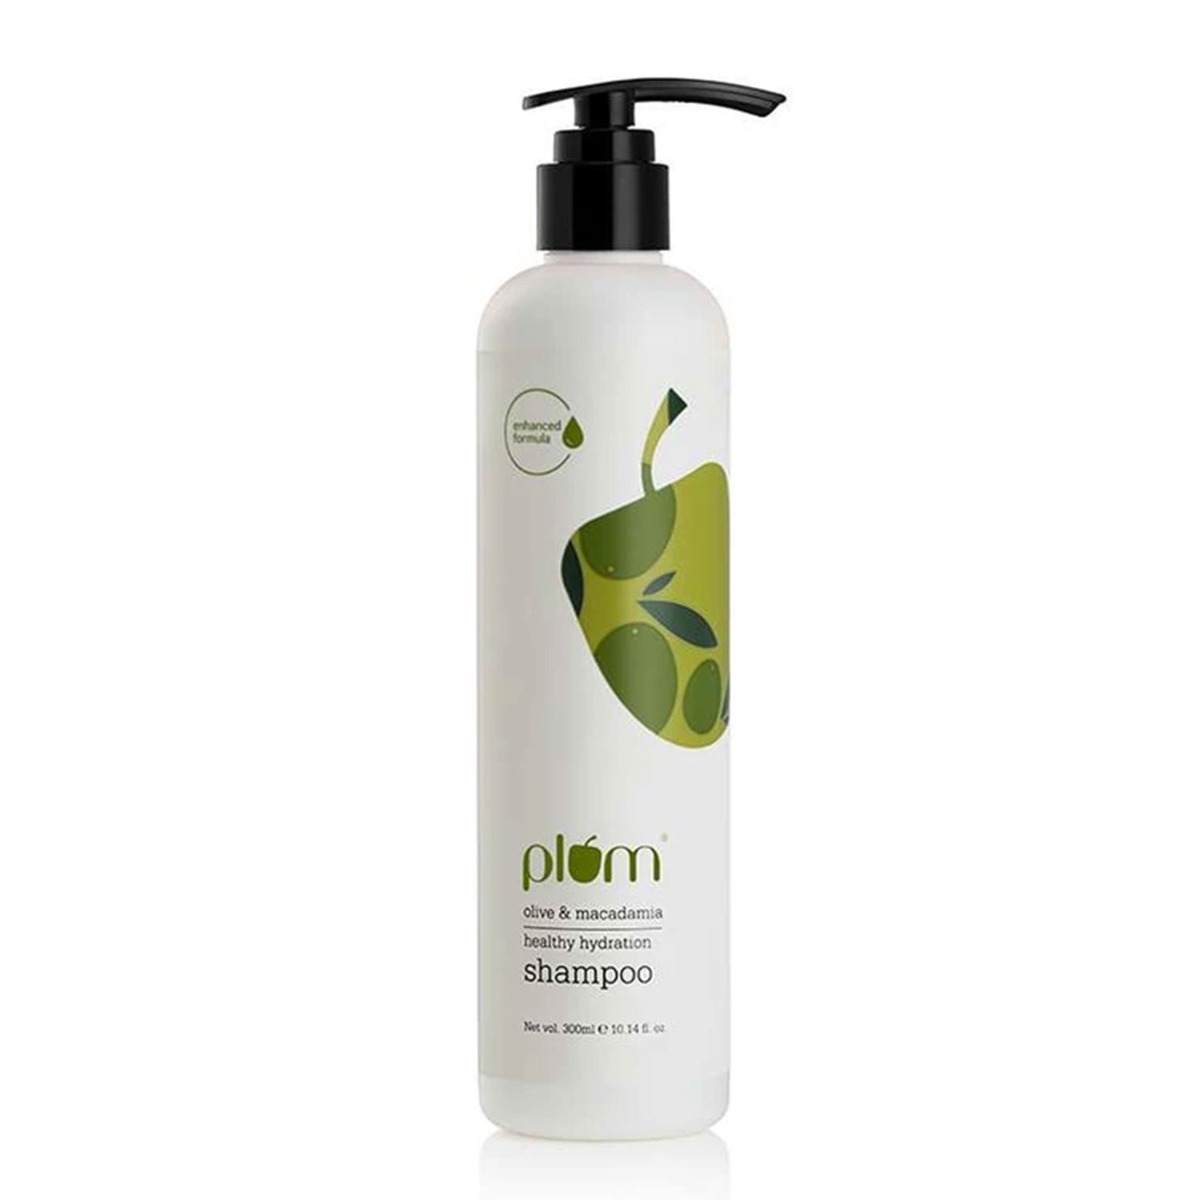 Plum Olive & Macadamia Healthy Hydration Shampoo, 300ml